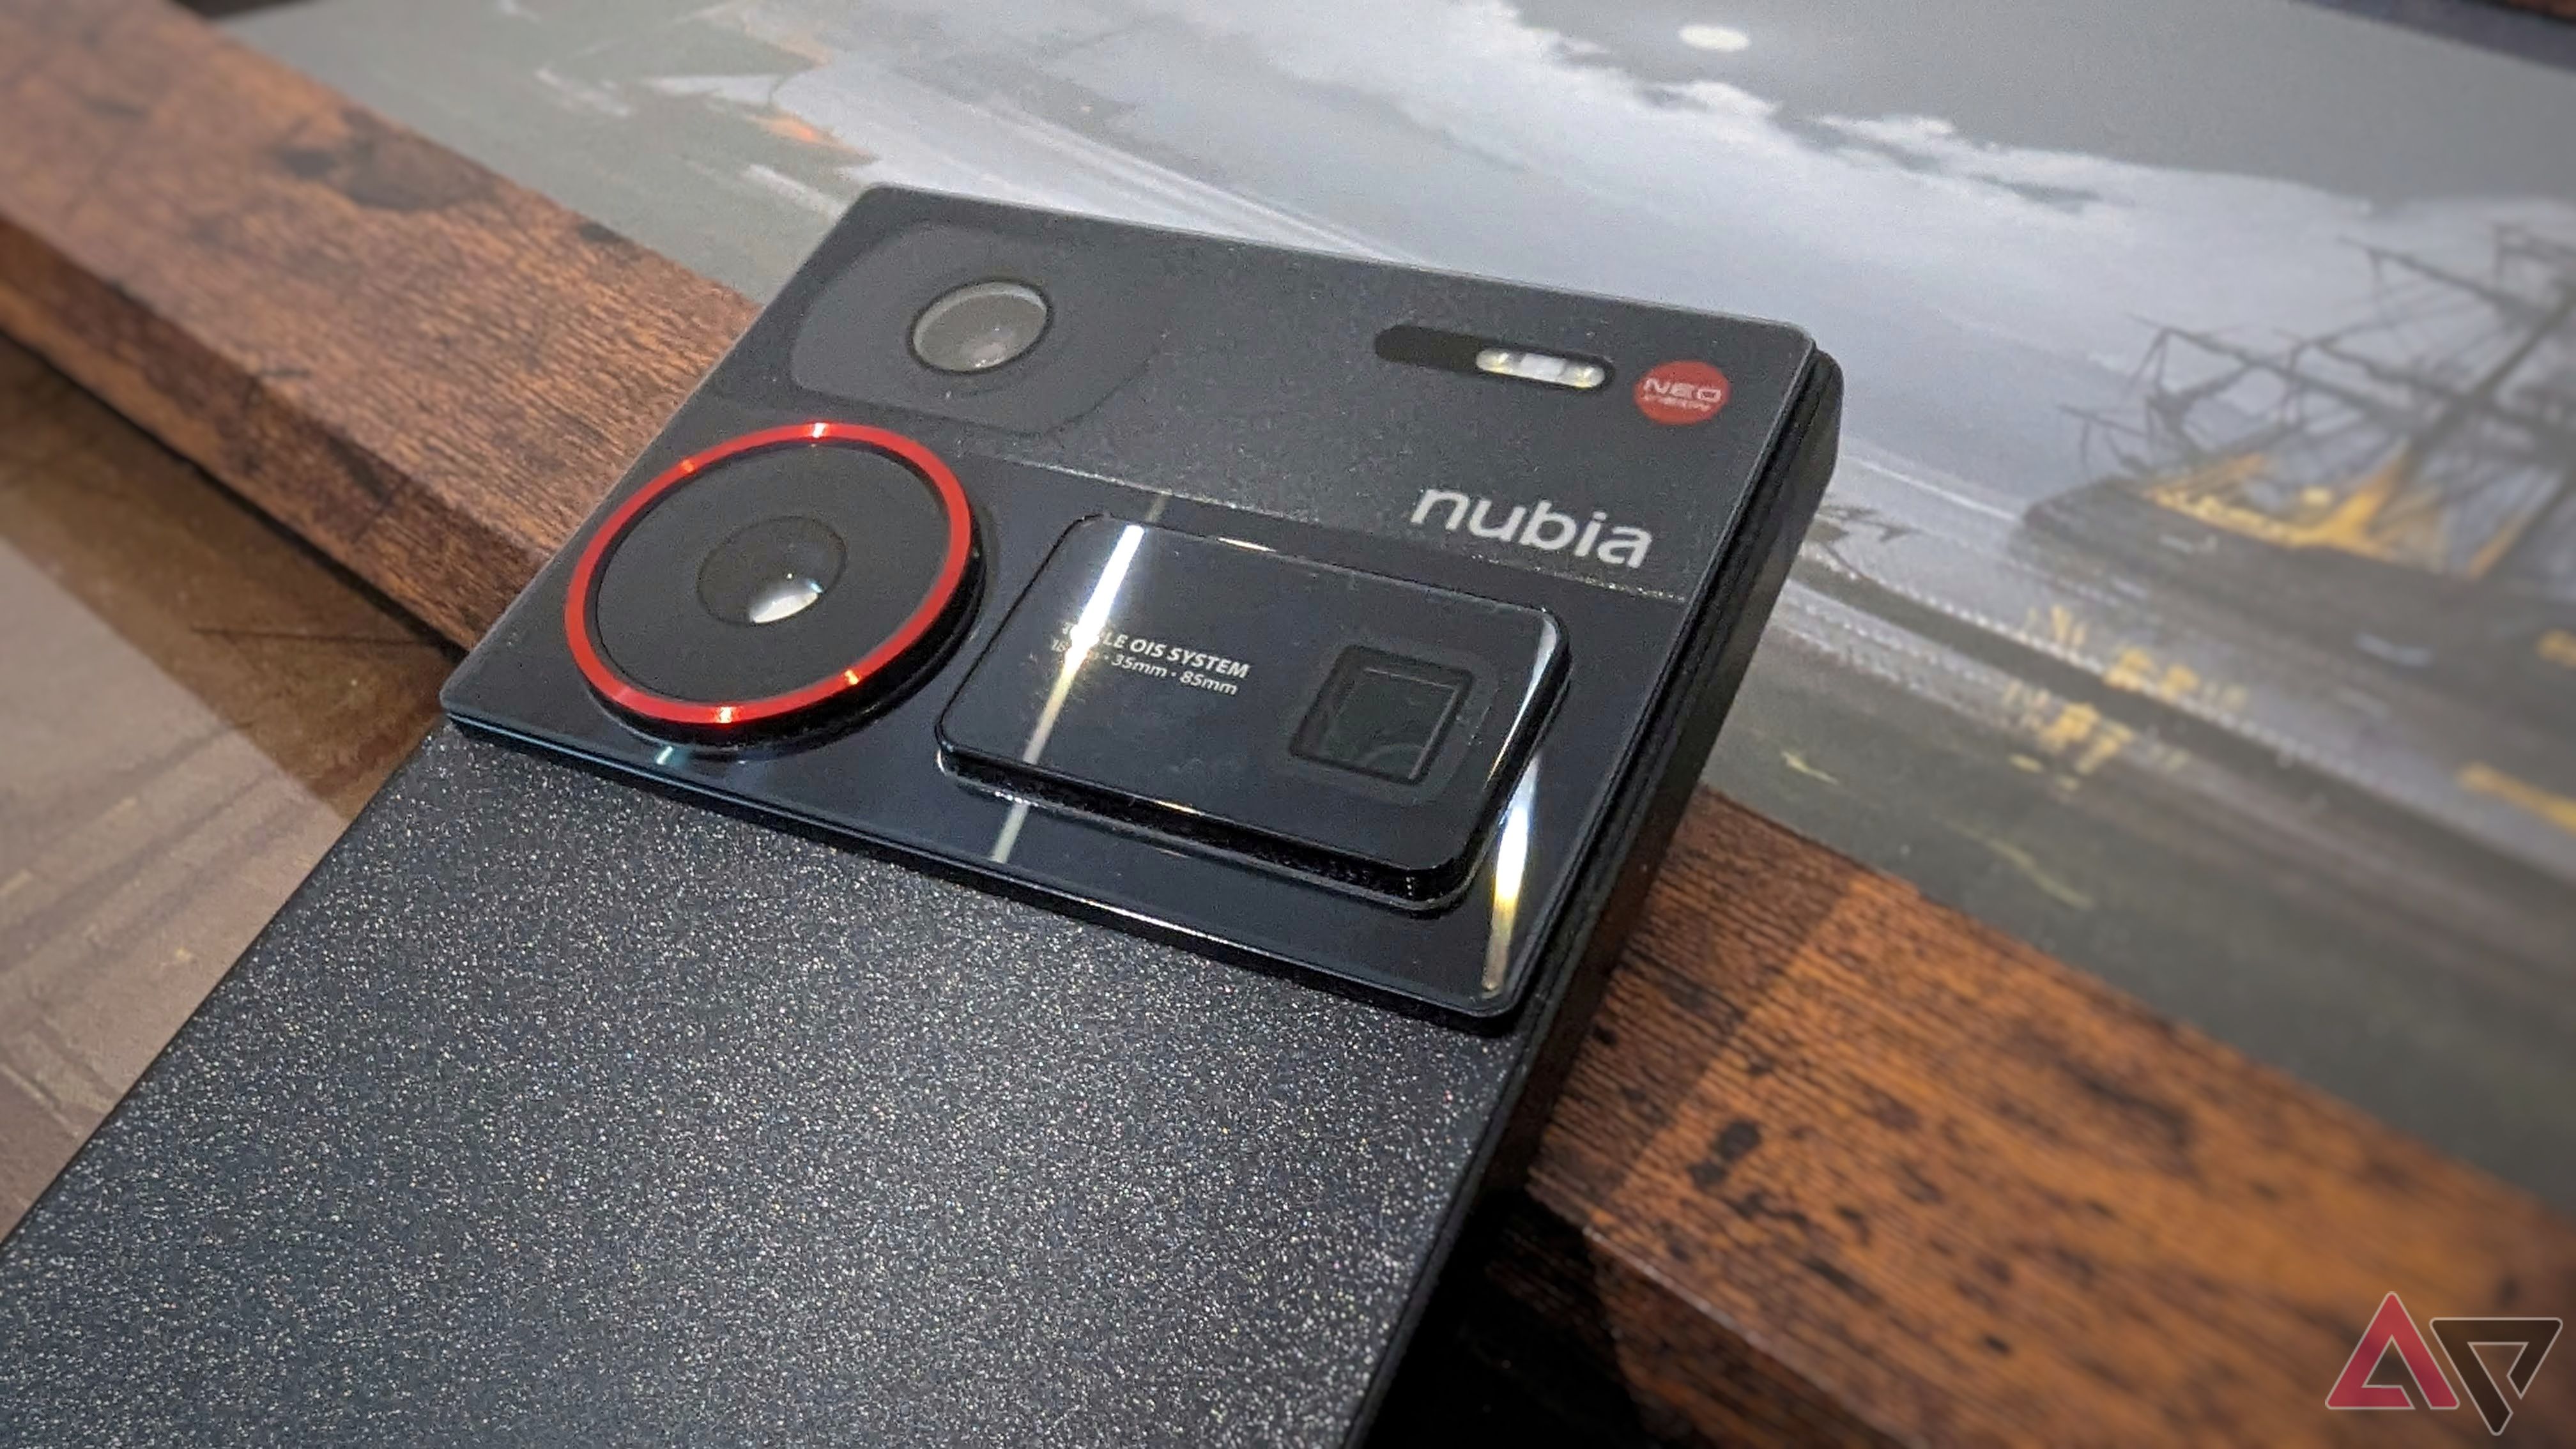 Nubia Z60 Ultra – Miphone